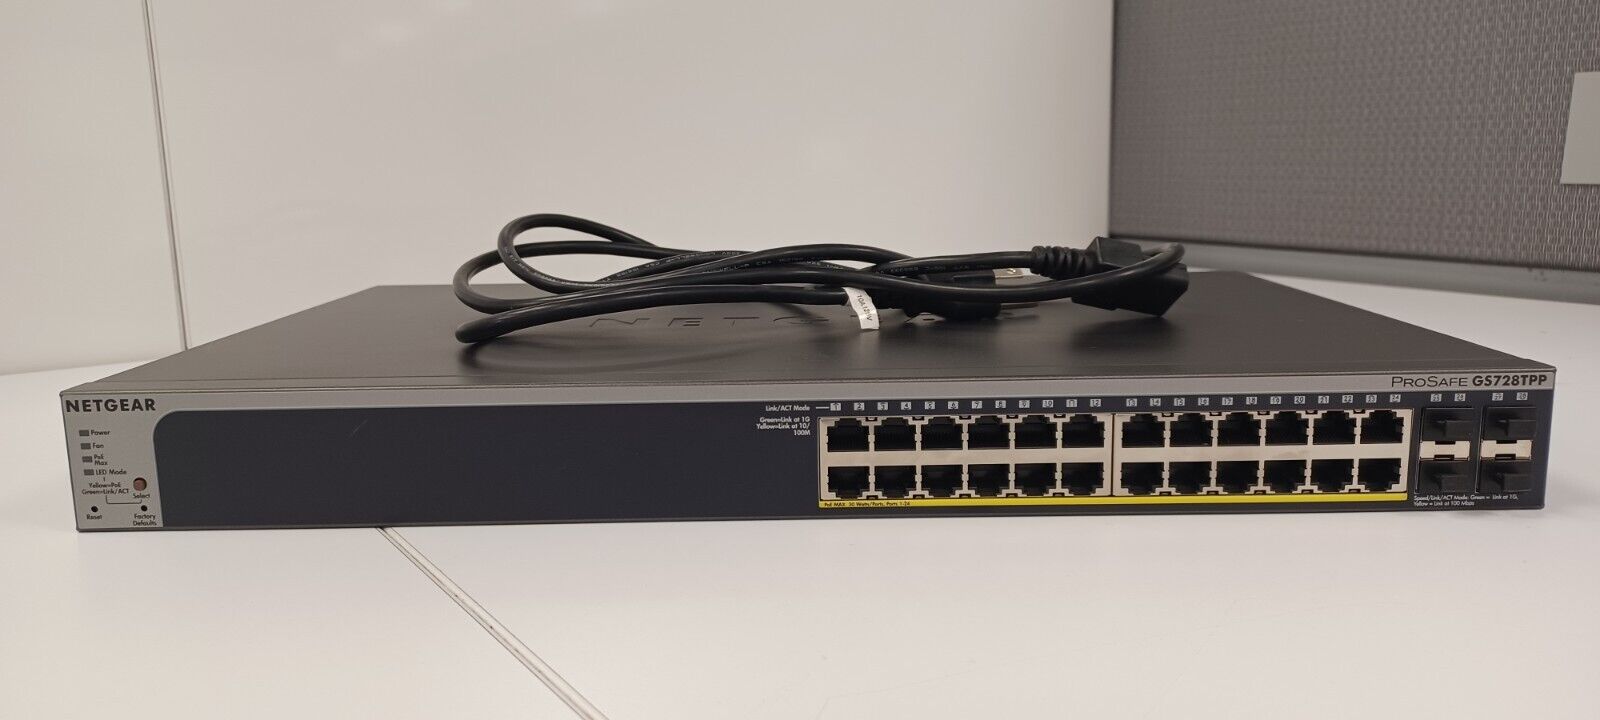 NETGEAR 28-Port PoE Gigabit Ethernet Smart Switch (GS728TPP) - w/power cord